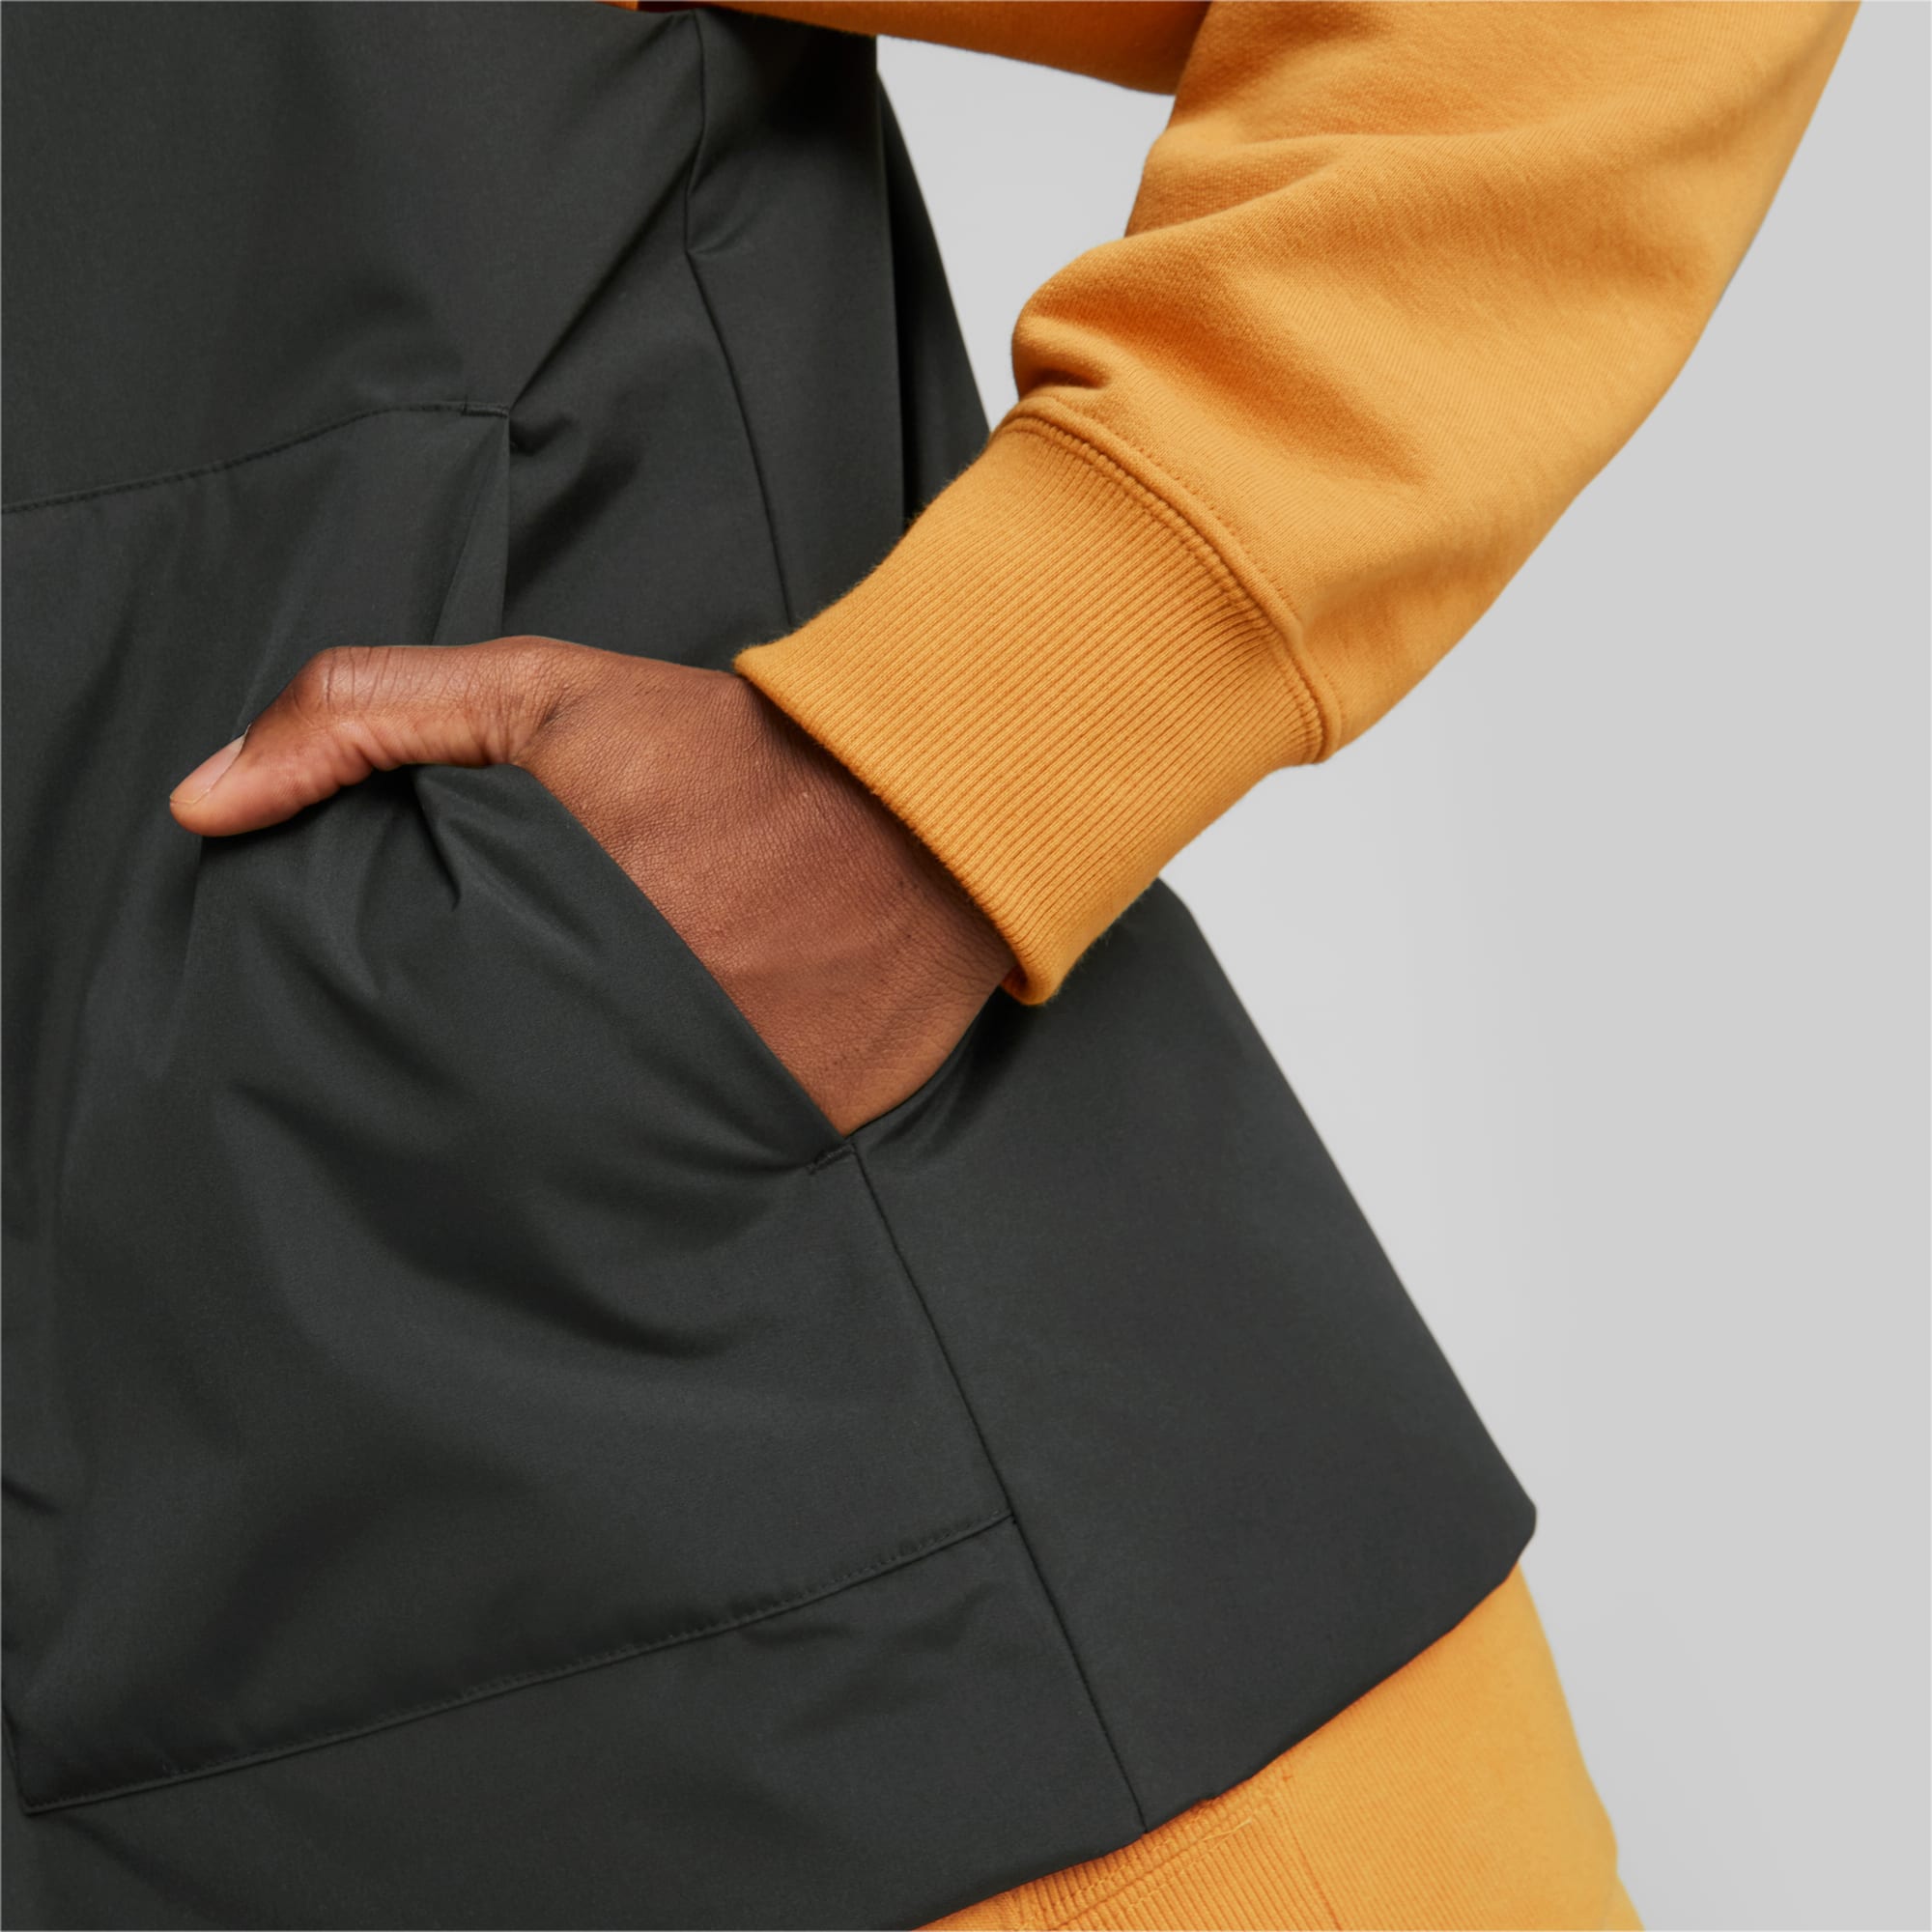 PUMA Classics Gilet Men Men's Jacket, Black, Size XS, Clothing